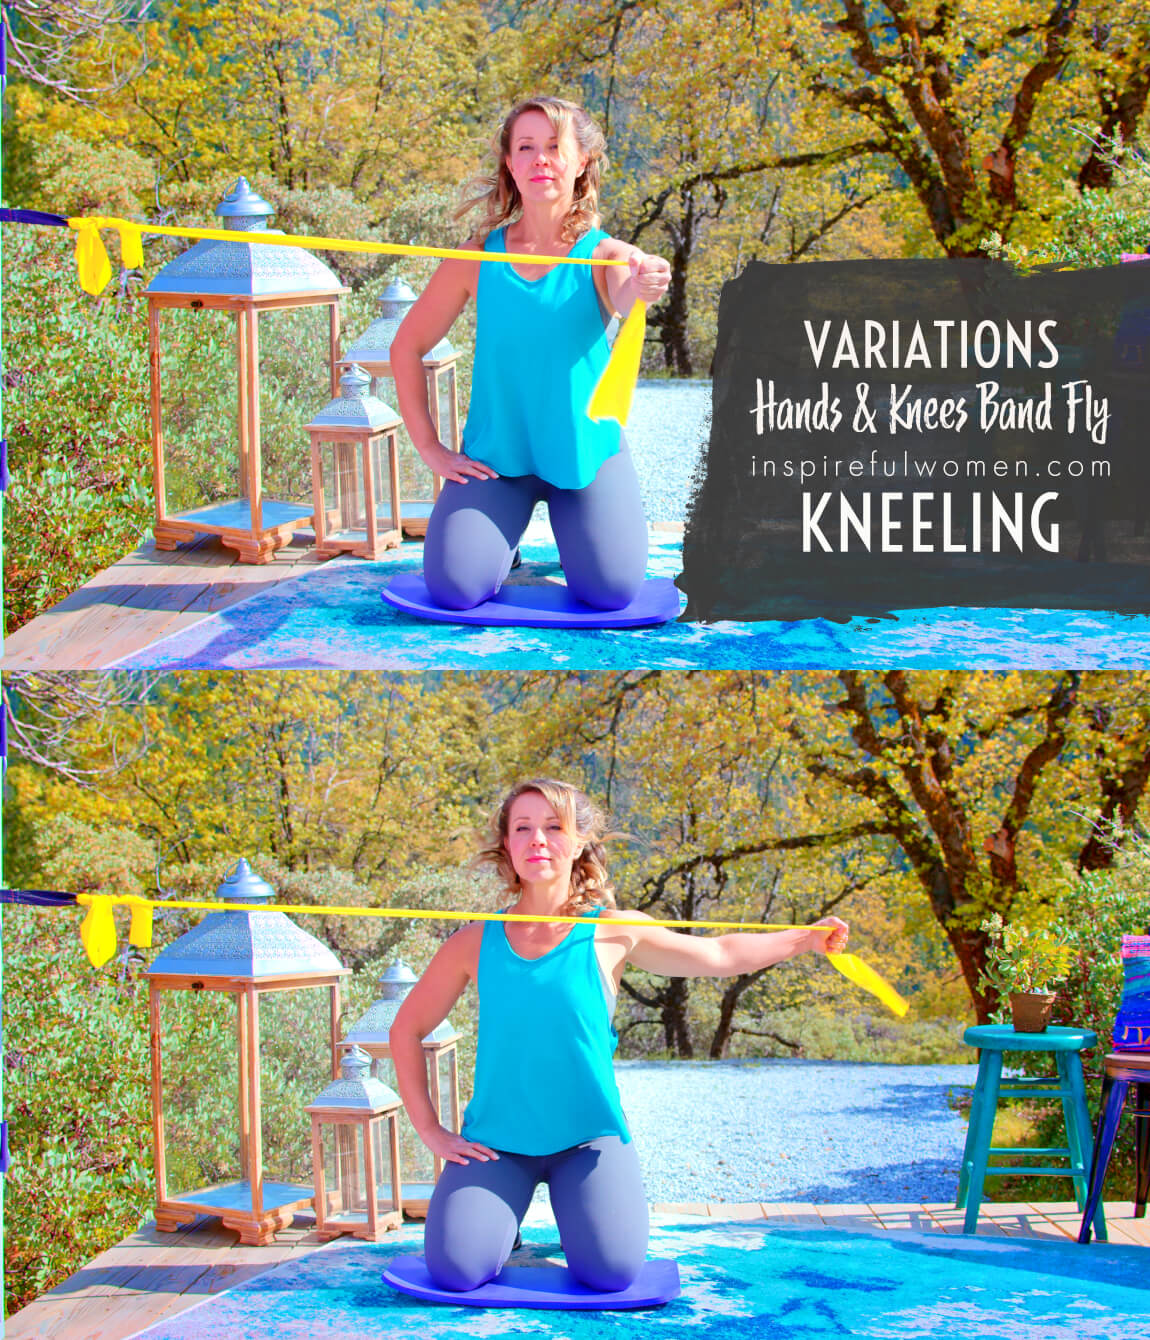 kneeling-hands-and-knees-quadruped-rear-delt-banded-fly-wall-anchored-home-shoulder-workout-variations